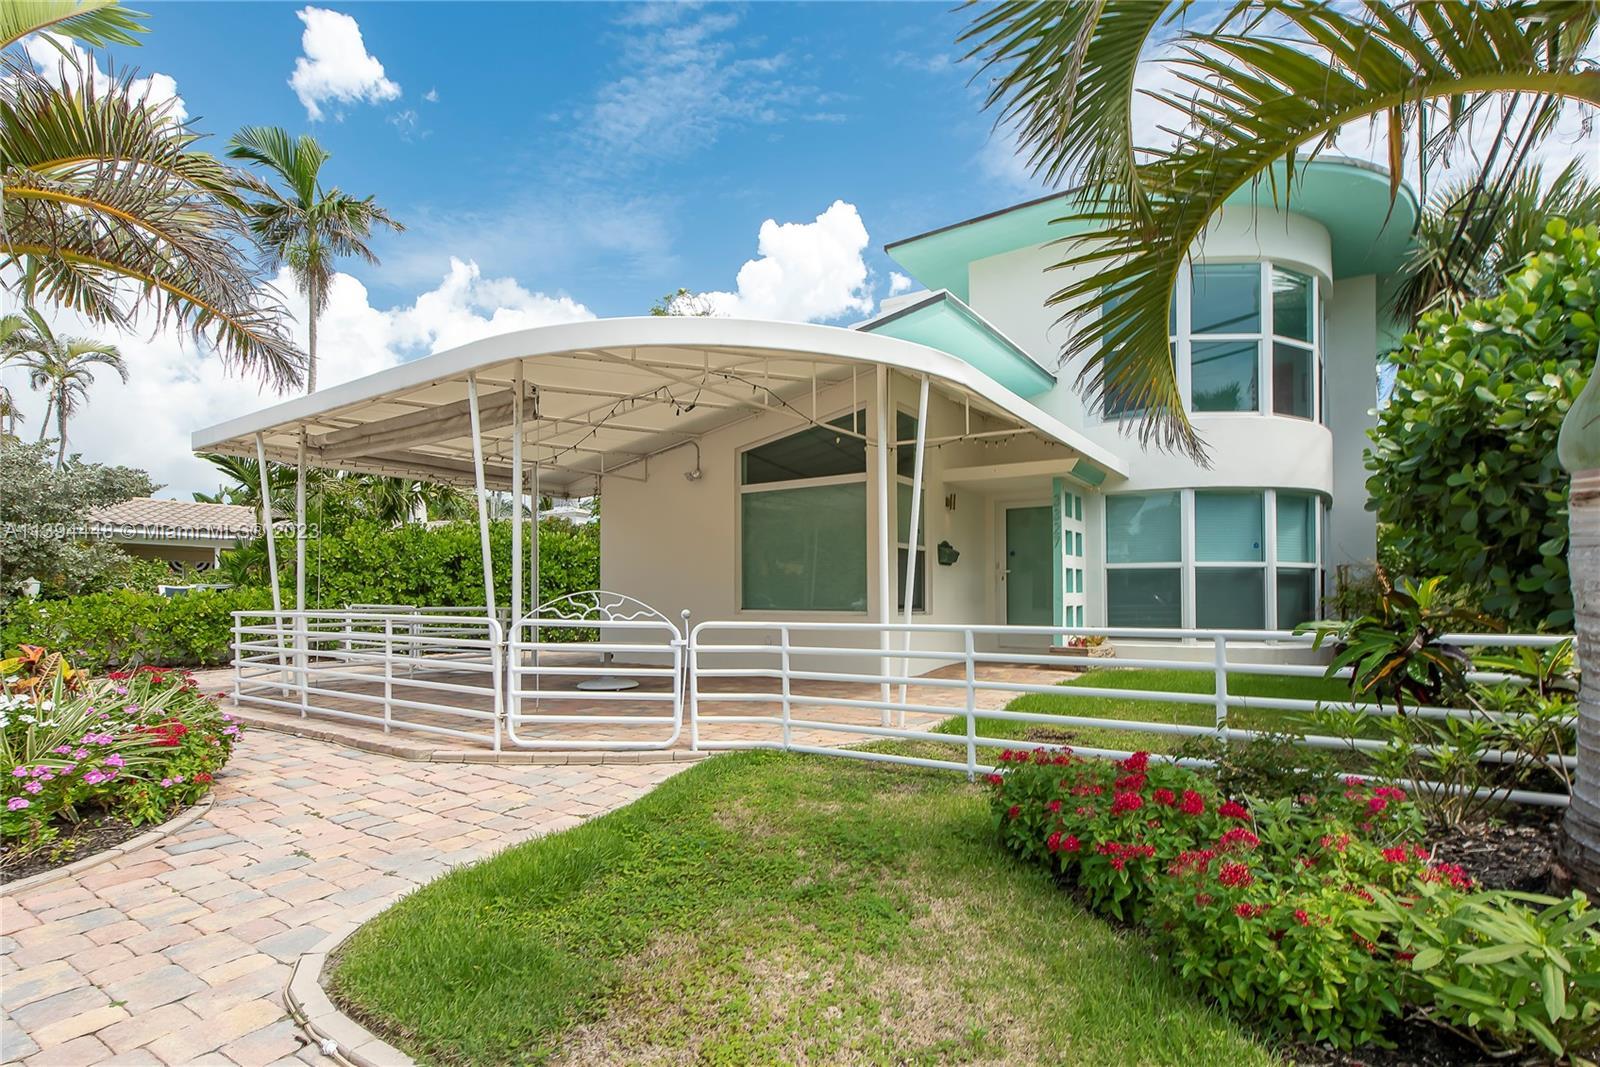 Rental Property at 3327 Ne 15th Ct, Fort Lauderdale, Broward County, Florida - Bedrooms: 4 
Bathrooms: 4  - $9,500 MO.